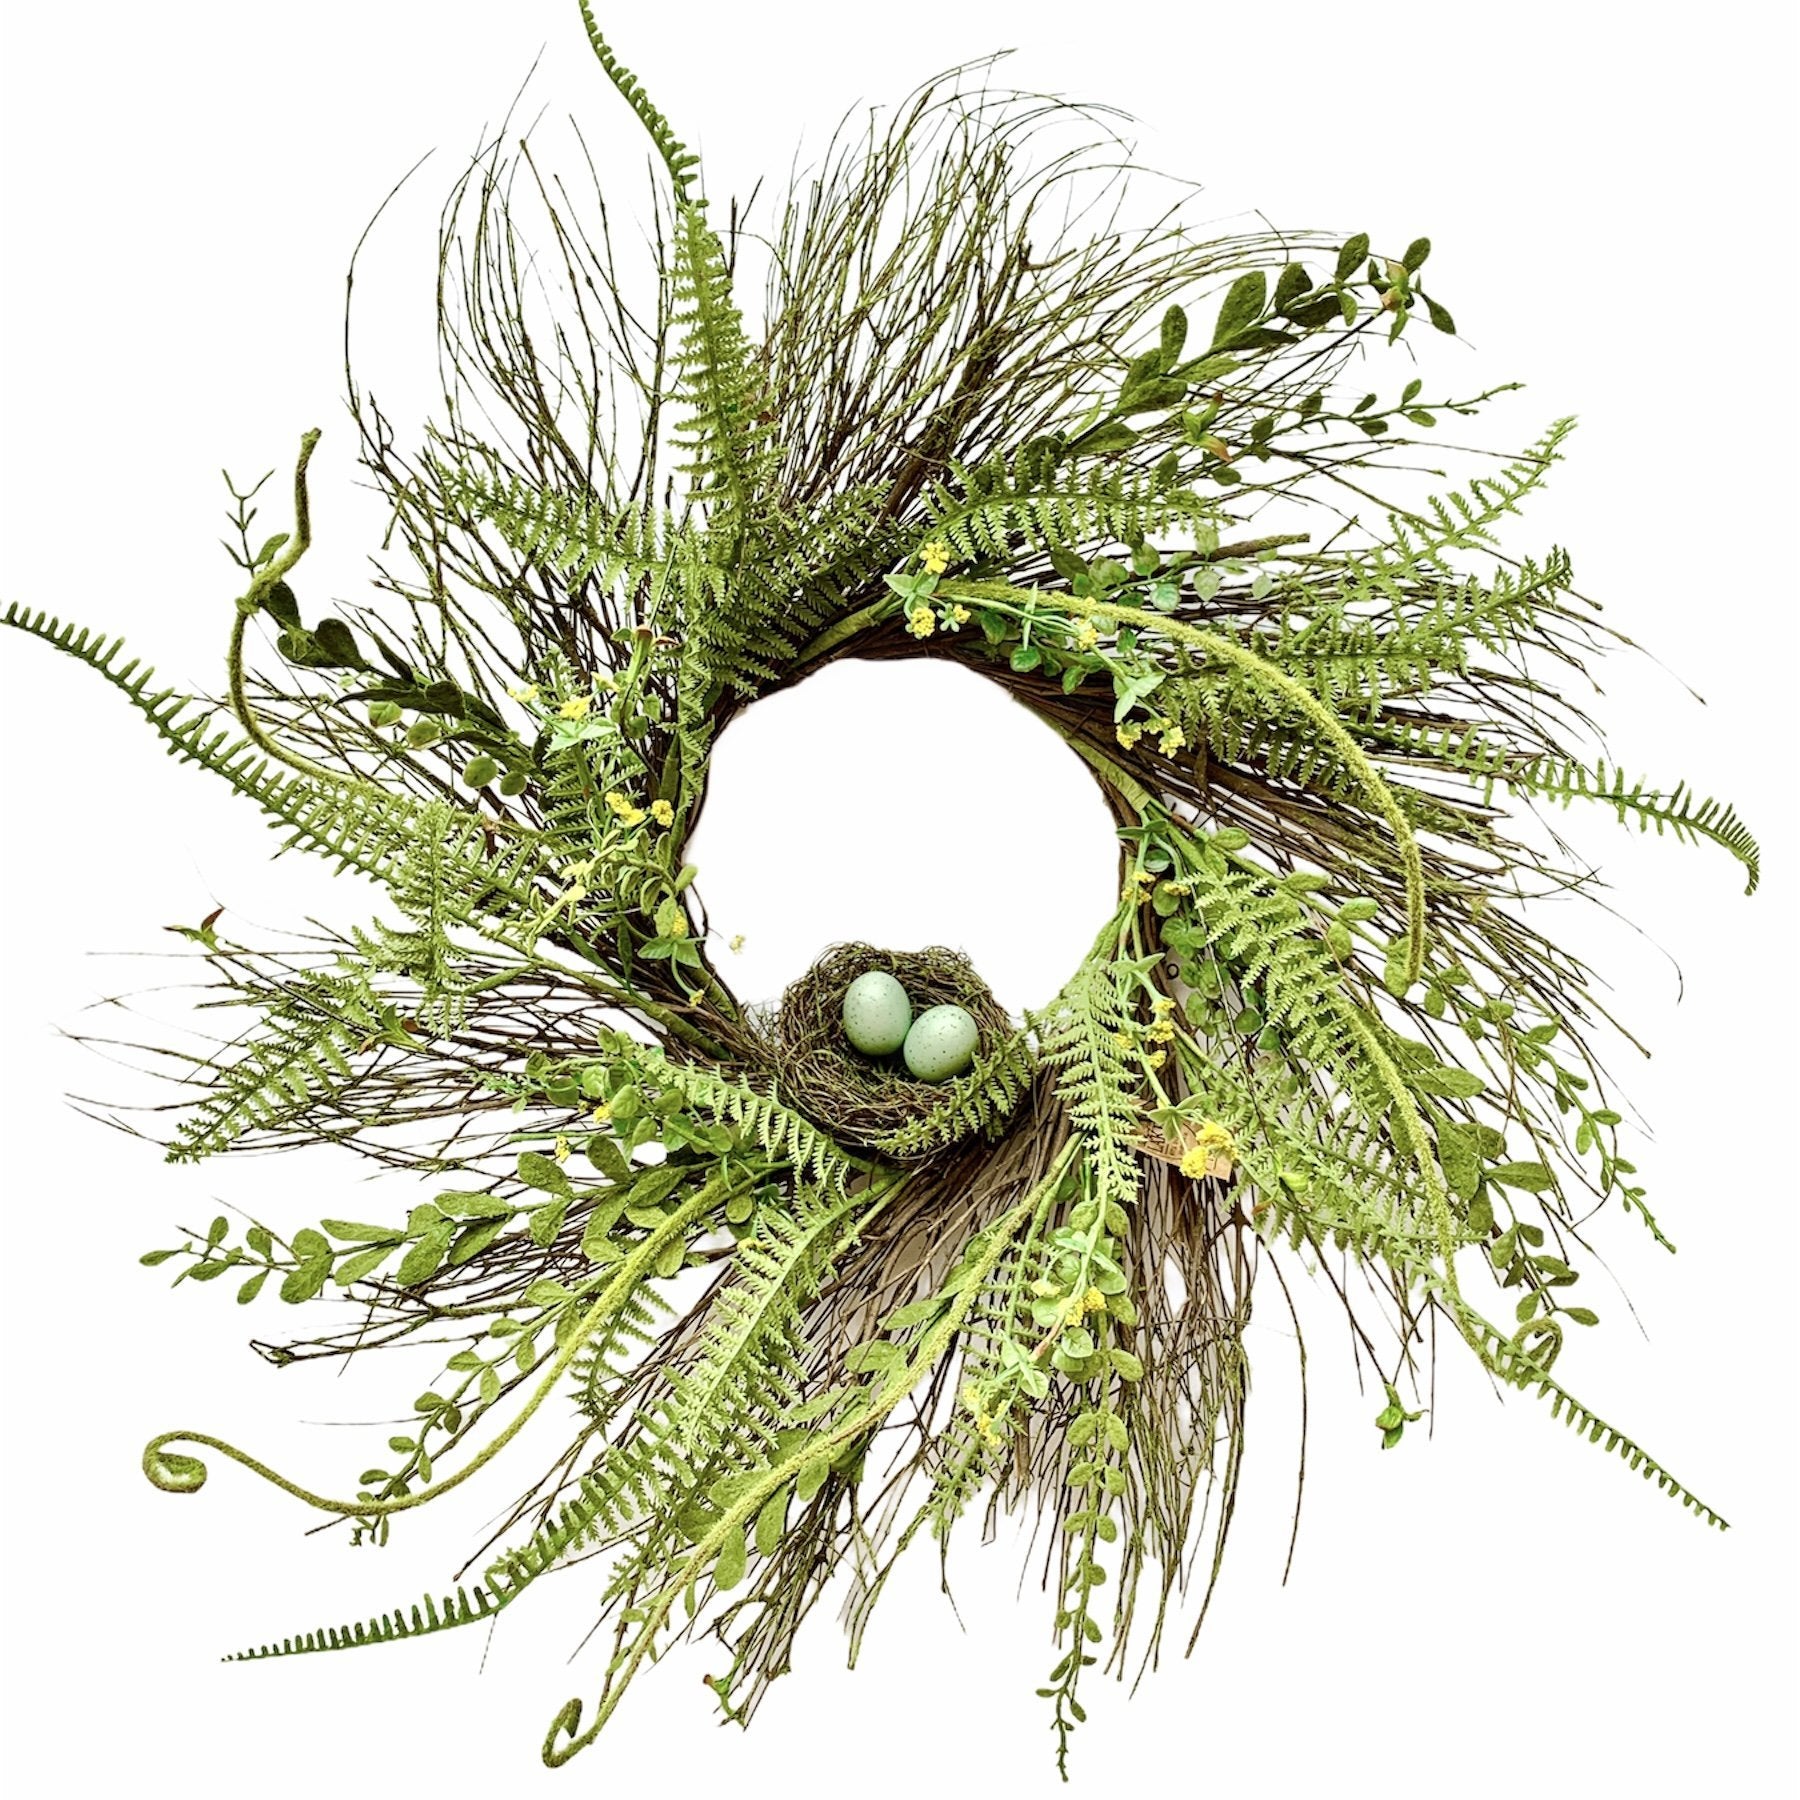 Green Fern & Willow Wreath With Birds Nest